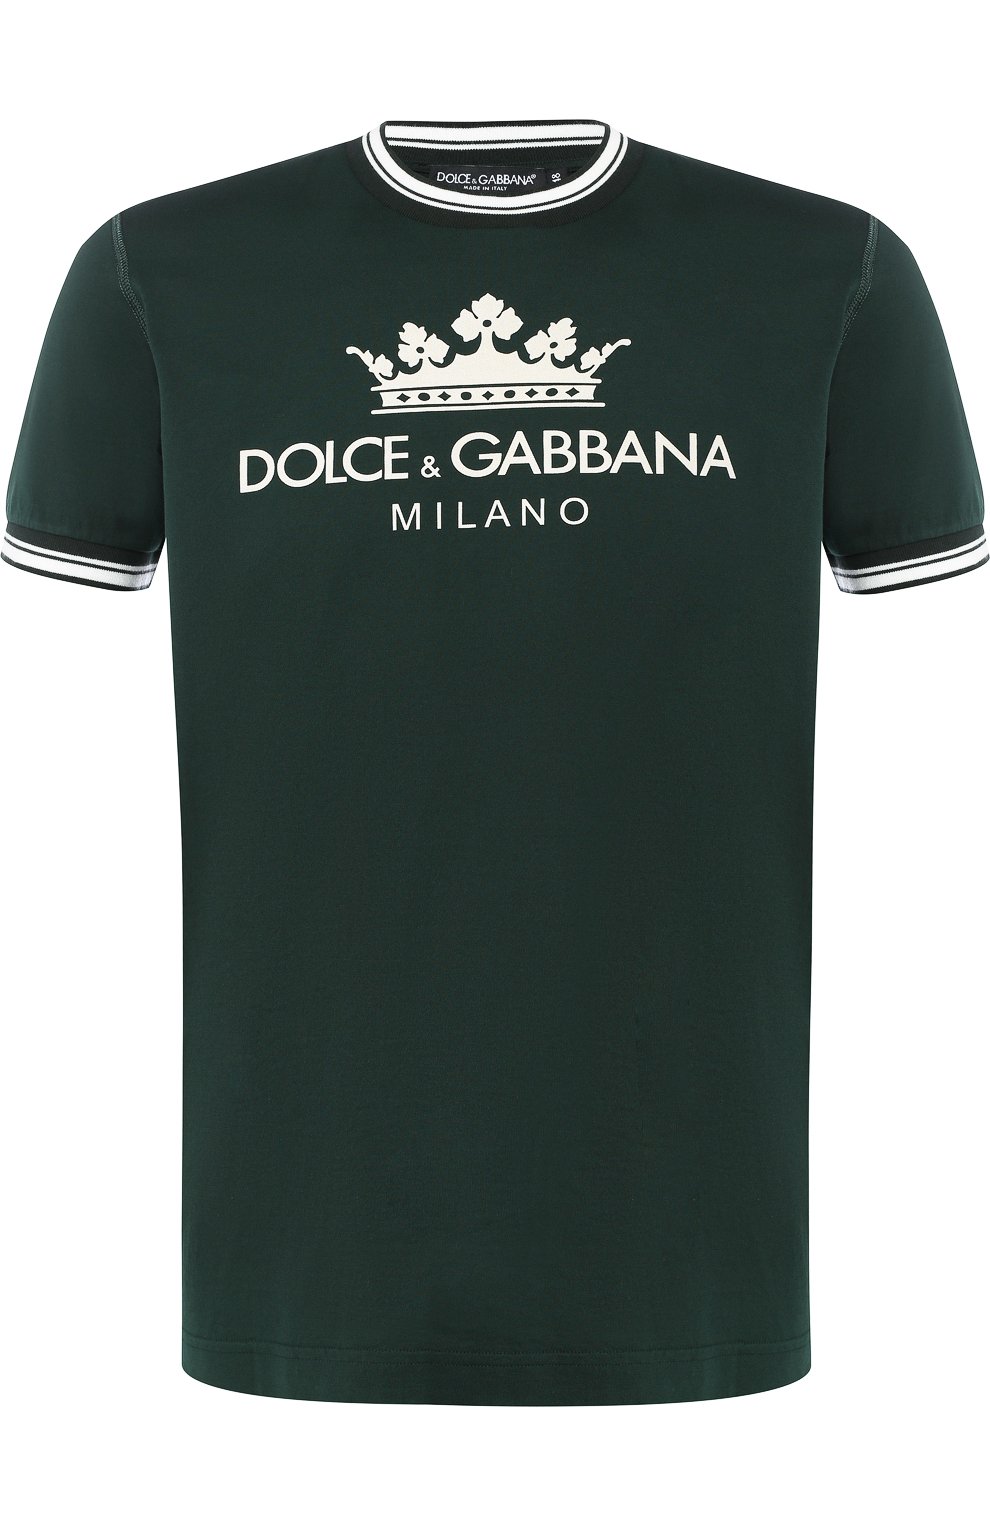 Футболка дольче габбана мужская. Dolce & Gabbana футболка зеленая мужская. Дольче Габбана футболка мужская зеленая. Dolce Gabbana Milano Italia футболка. Футболка Дольче Габбана зеленая.